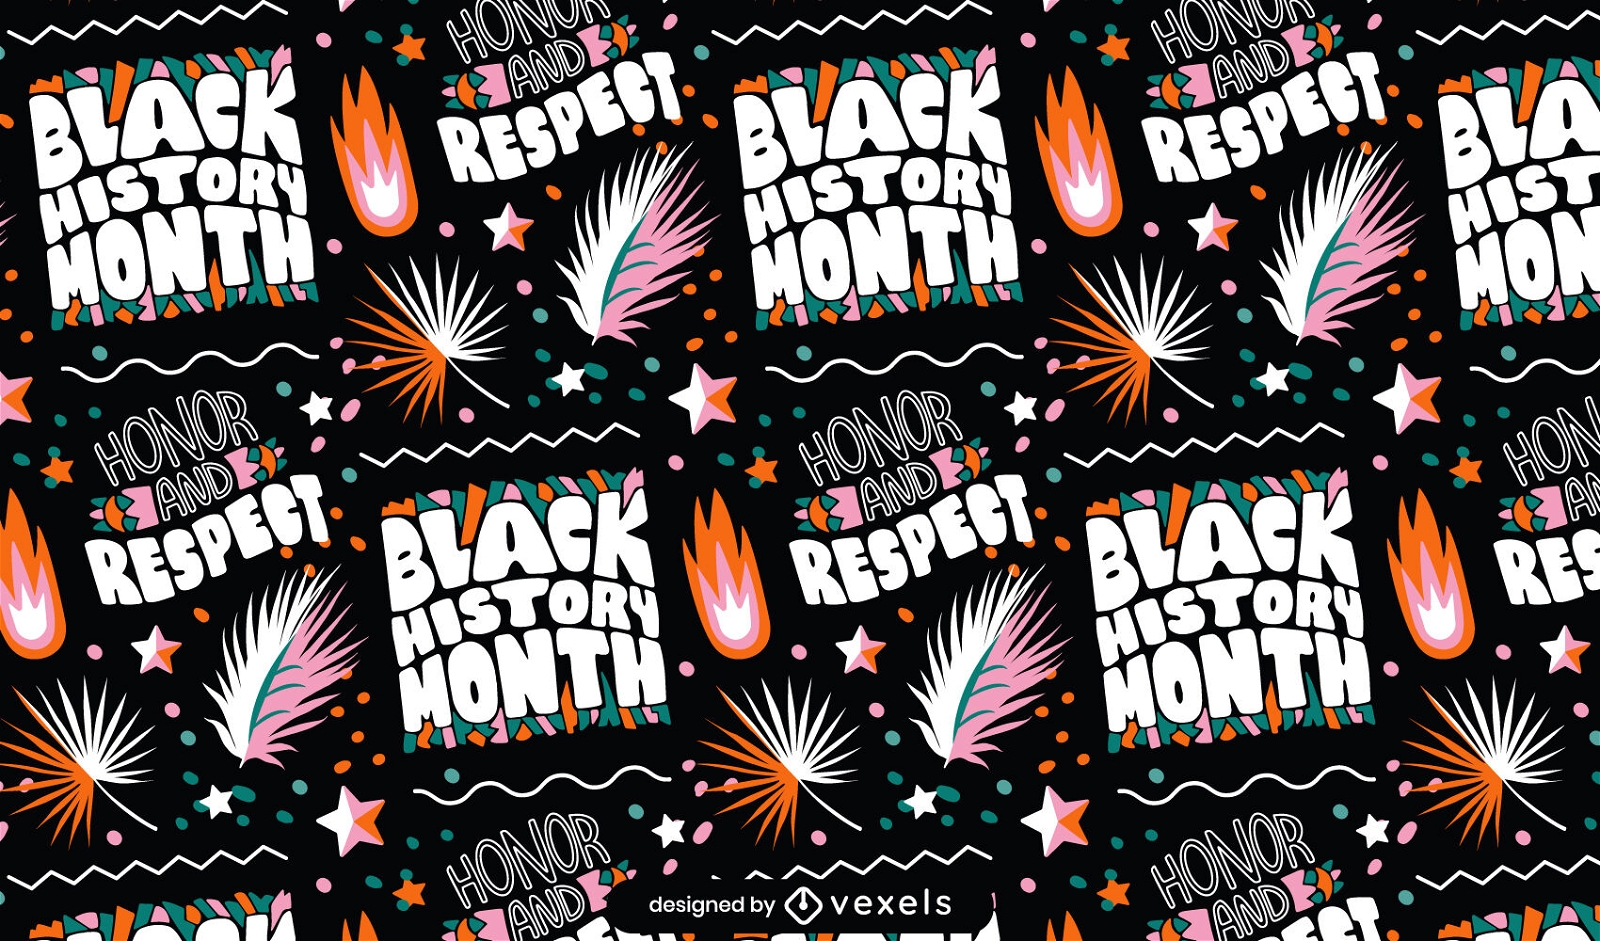 Colorful Black History Month pattern design